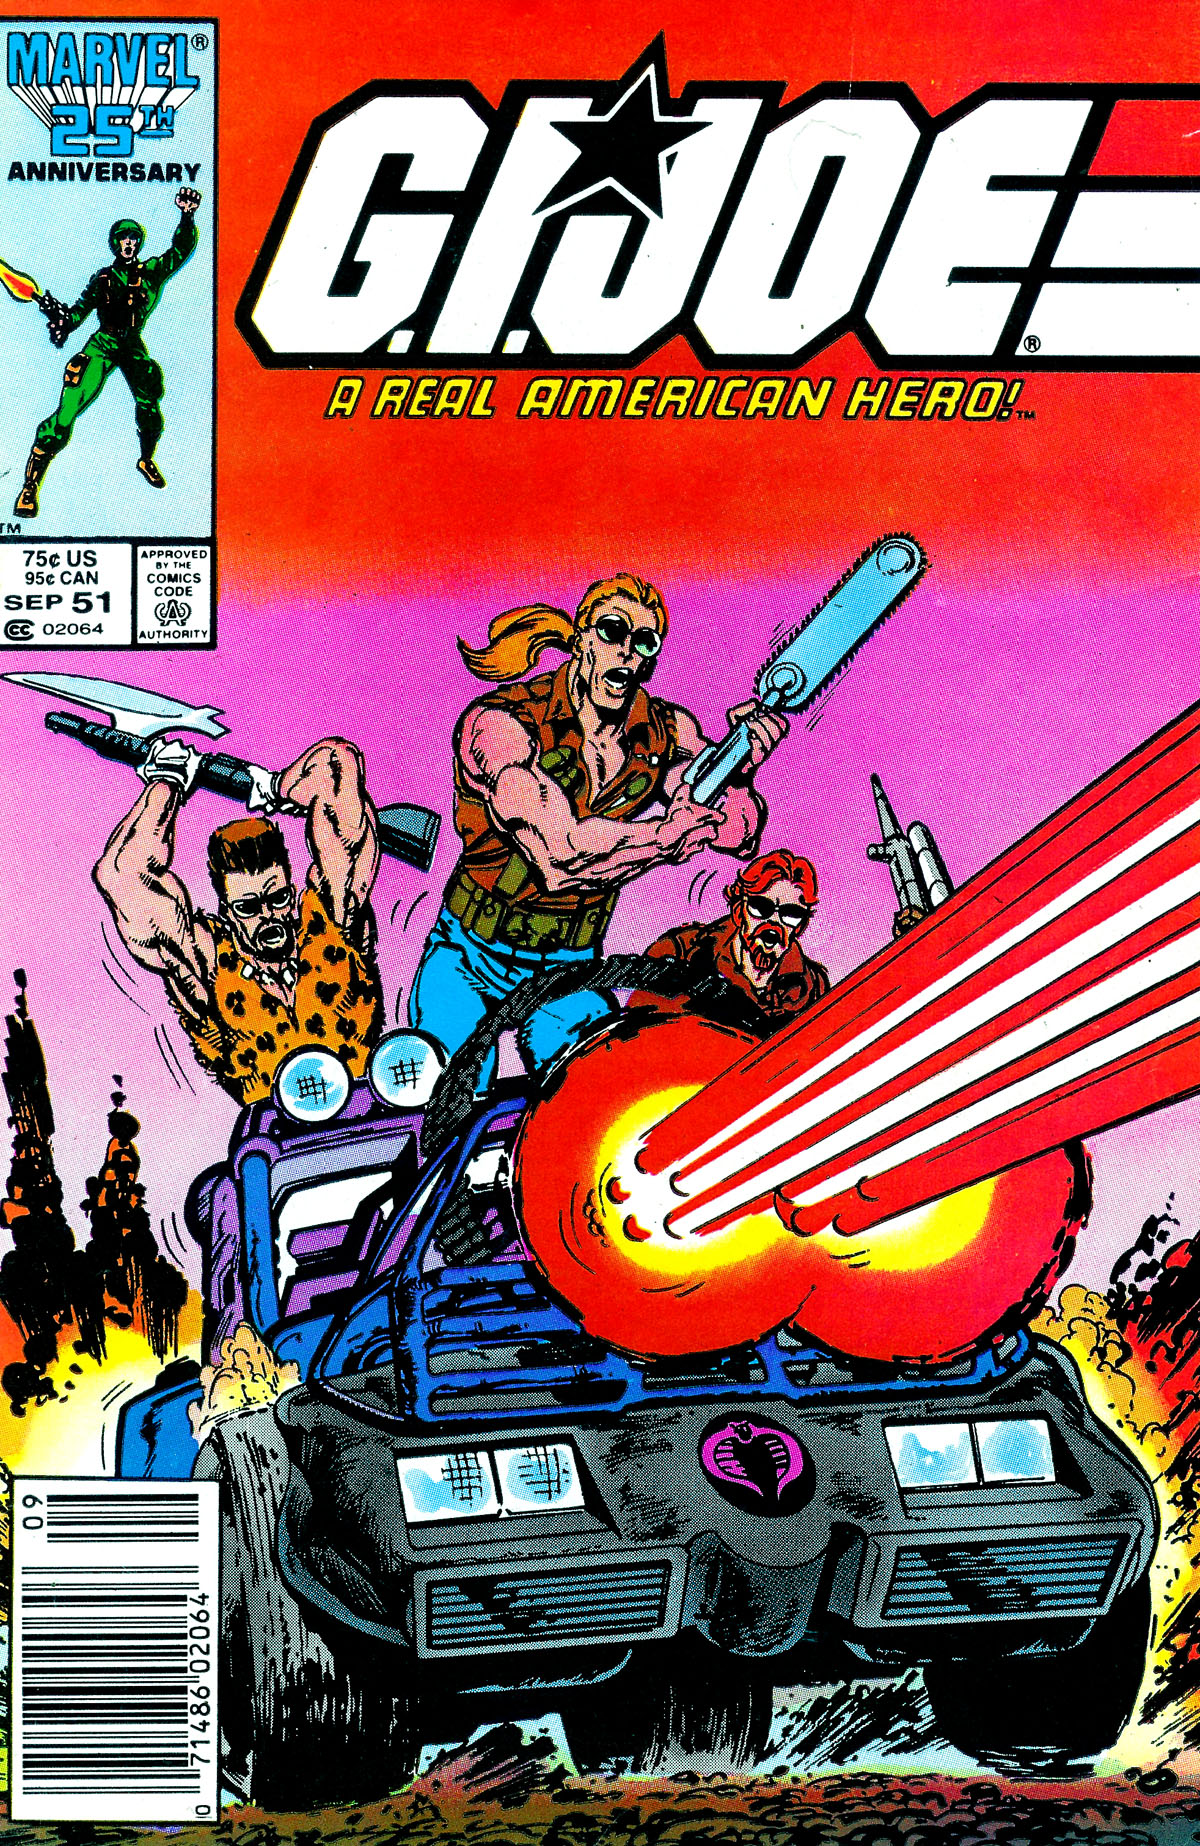 My Ten Favorite G.I. Joe Comic Book Covers of the Marvel Era BattleGrip